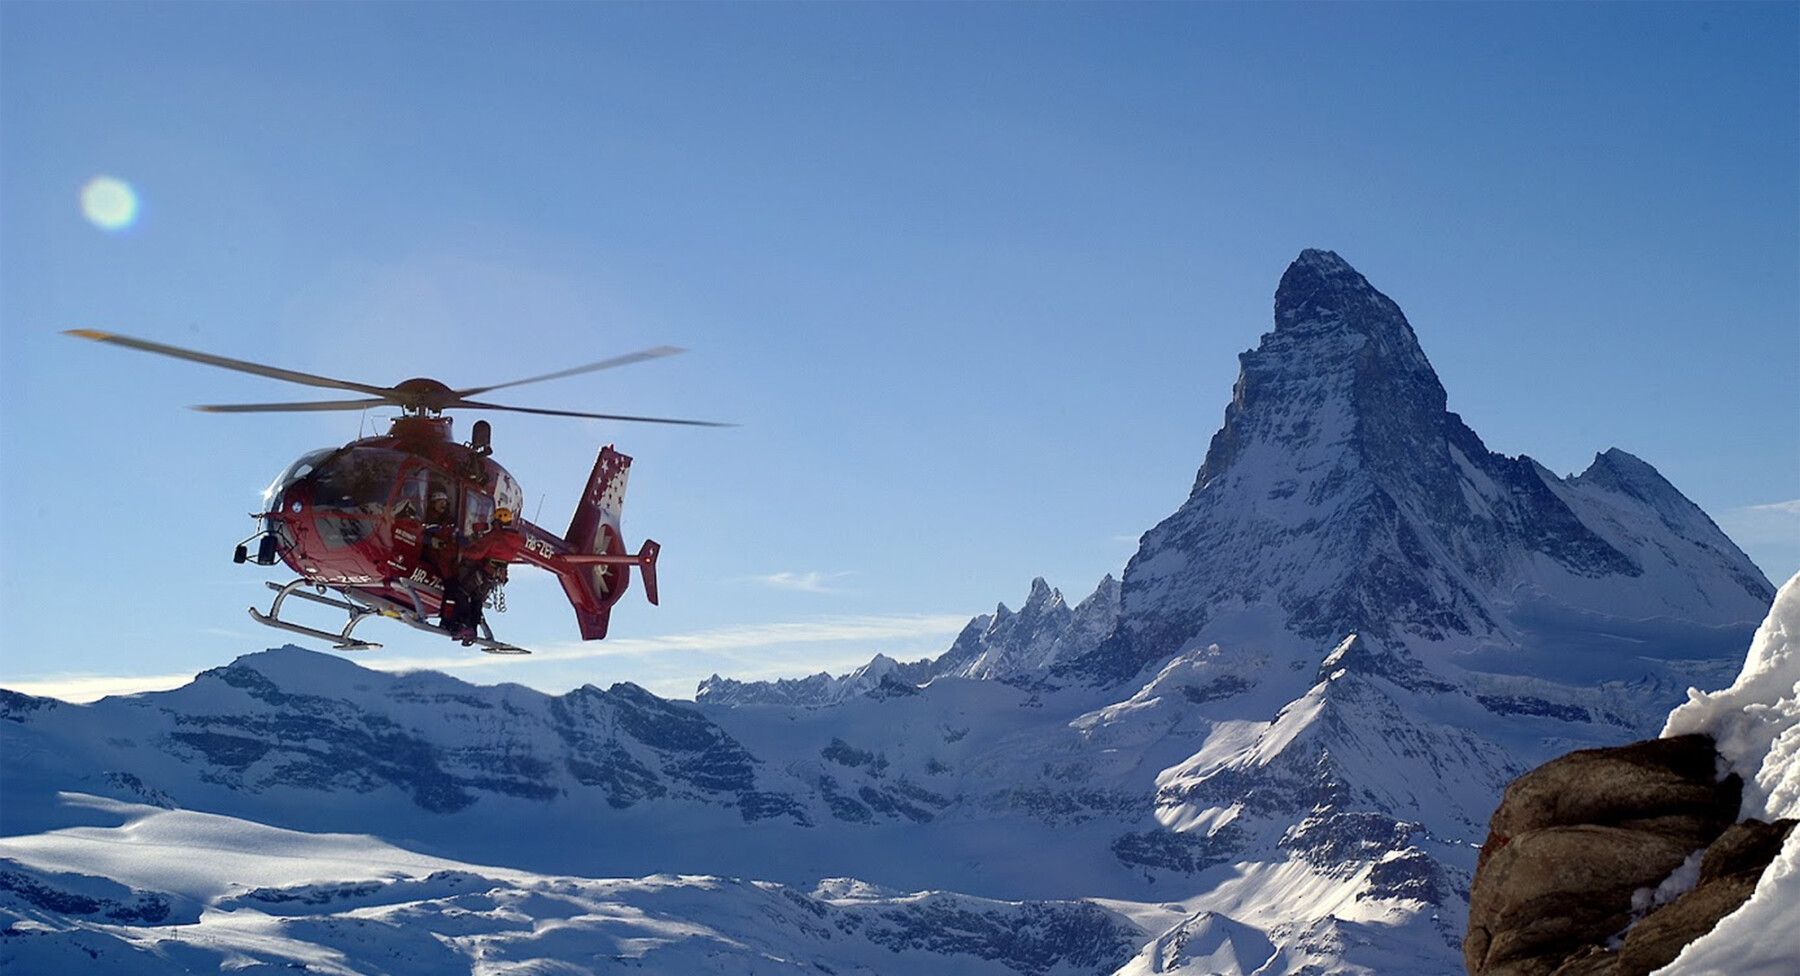 A helicopter in front of the Matterhorn at the luxury ski resort Zermatt